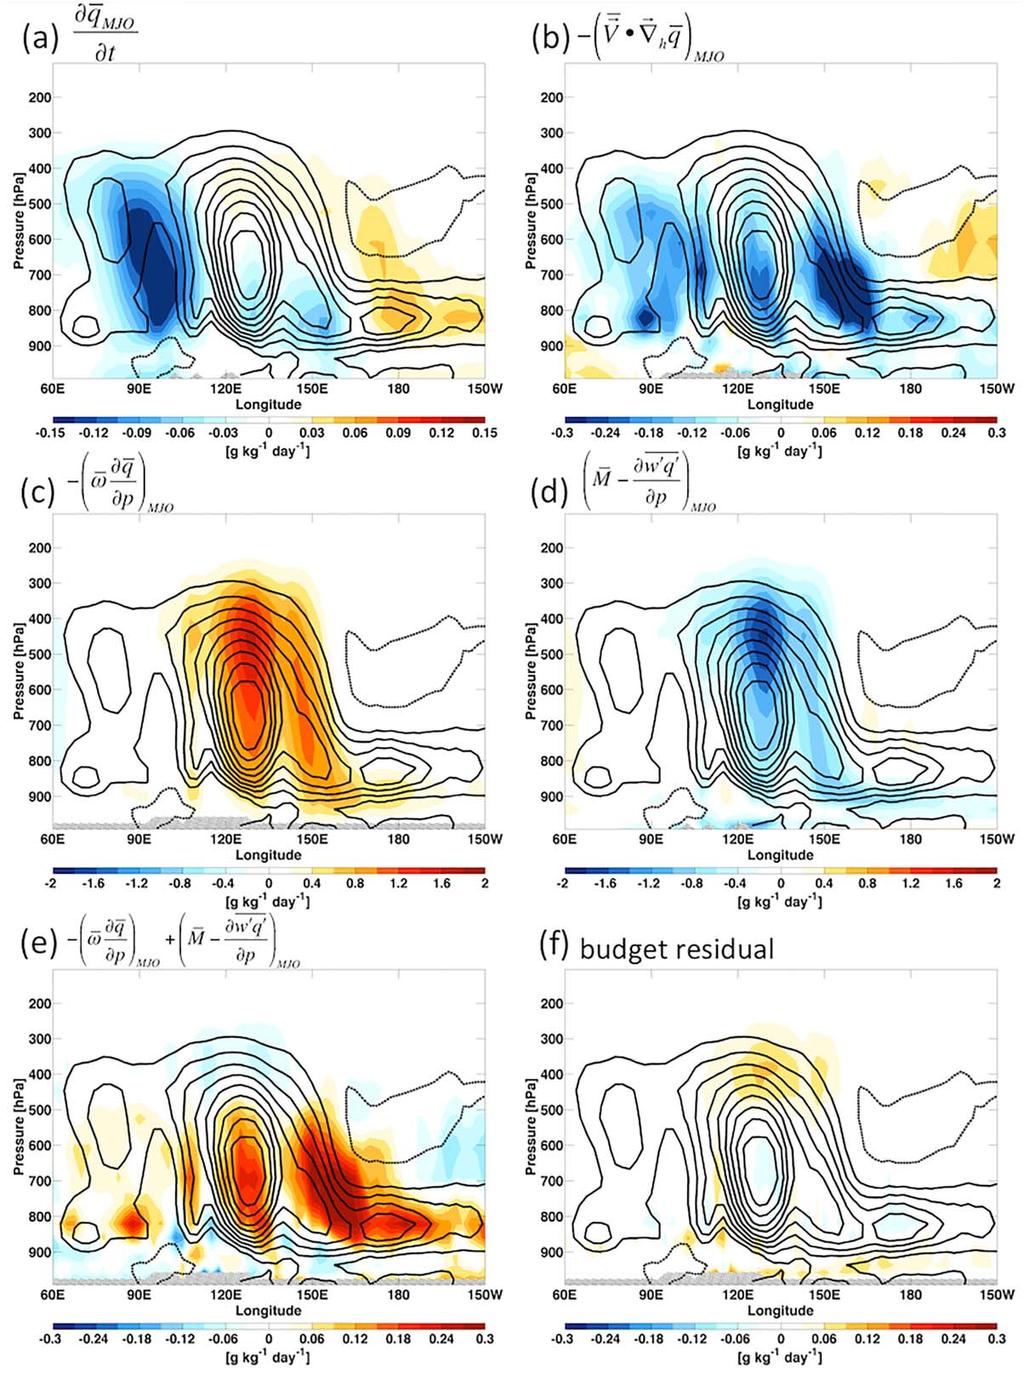 Figure 3. Longitude-height sections of latitudinally averaged (5 N-5 S) composite intraseasonal moisture budget terms (shading).